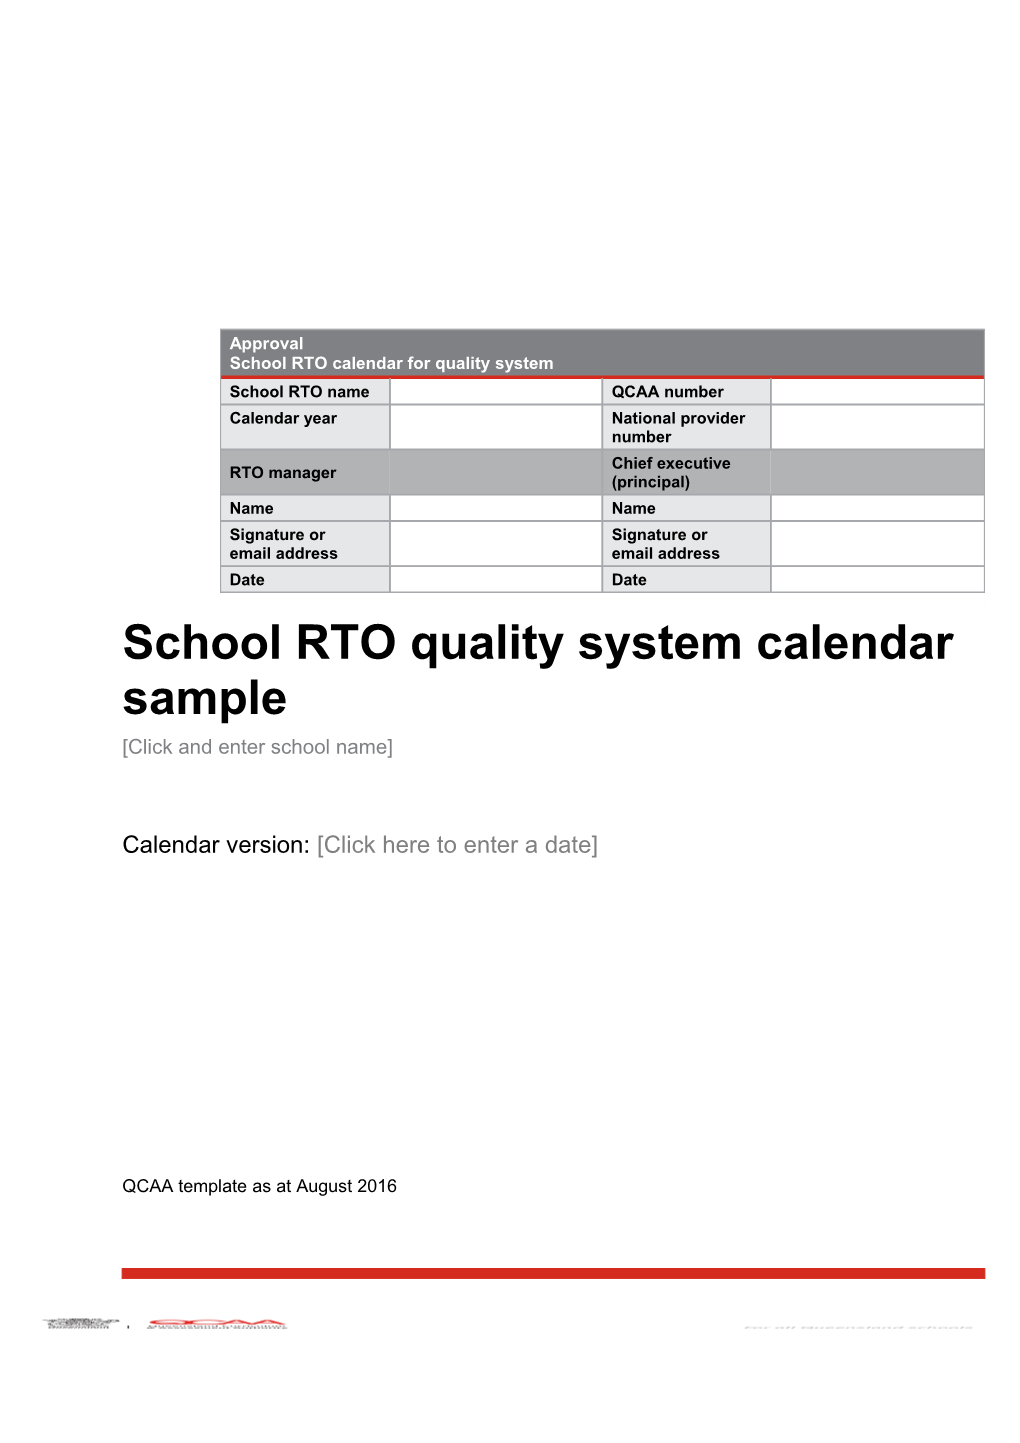 VET School RTO Quality System Calendar Sample